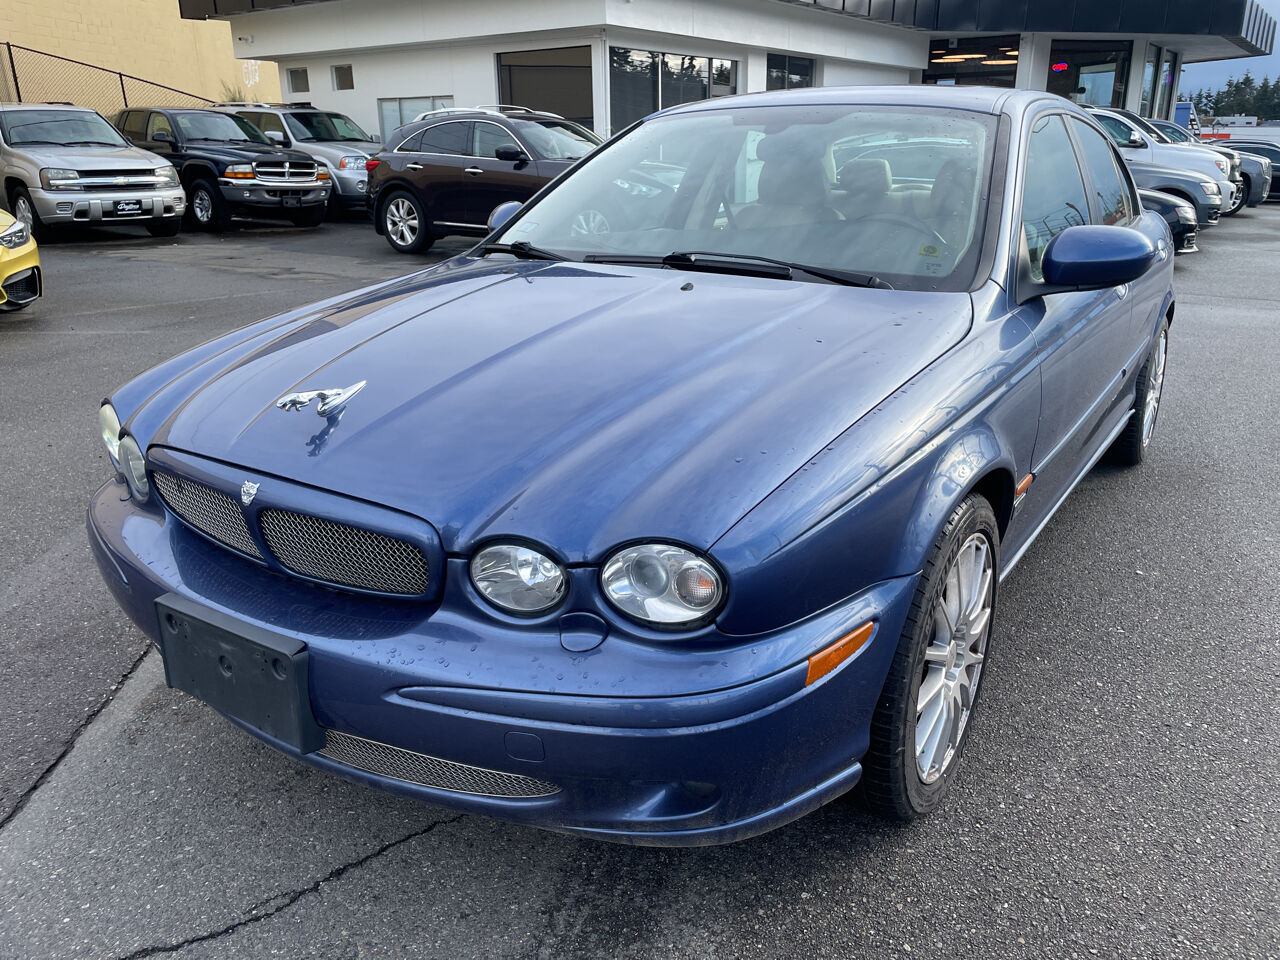 Jaguar X-Type For Sale In Los Angeles, CA - Carsforsale.com®